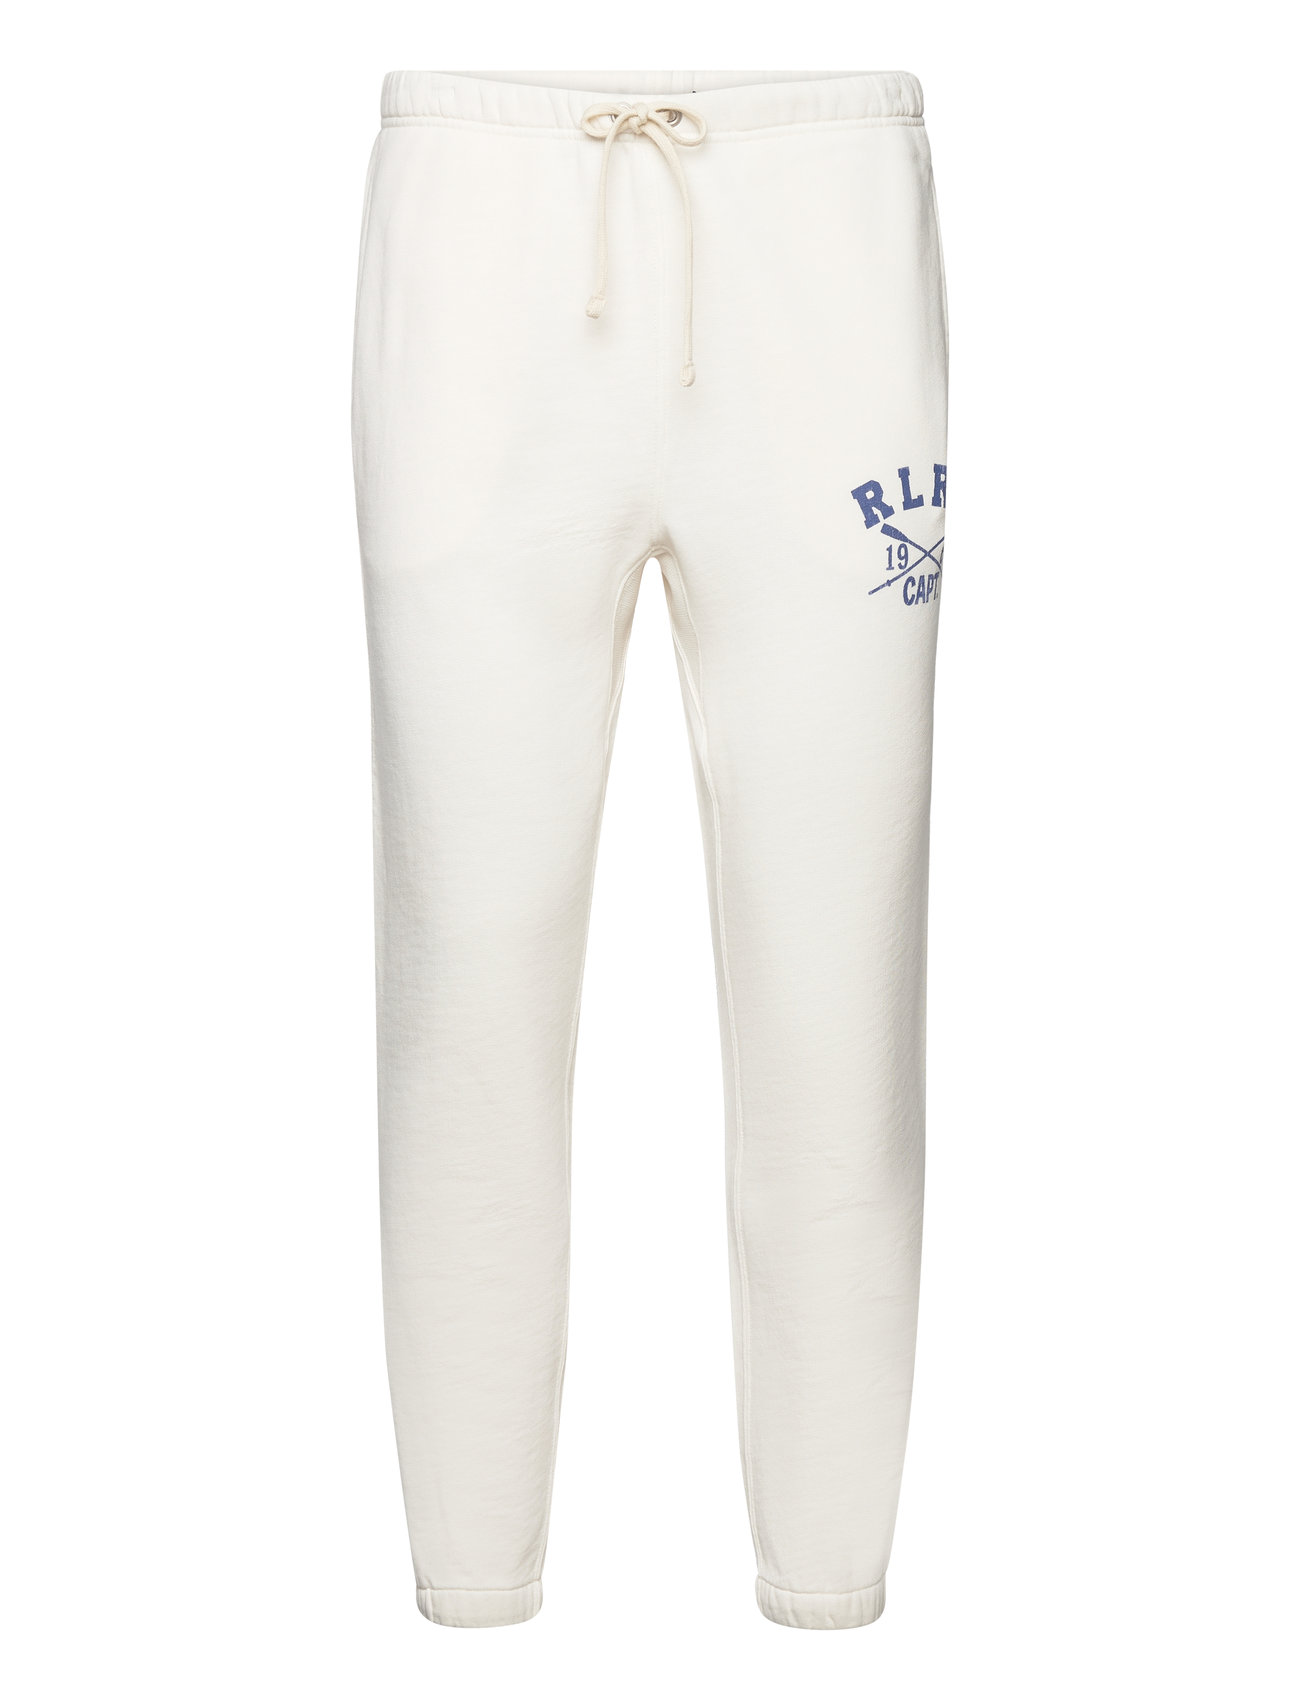 Polo Ralph Lauren Fleece Graphic Sweatpant - Sweatpants 